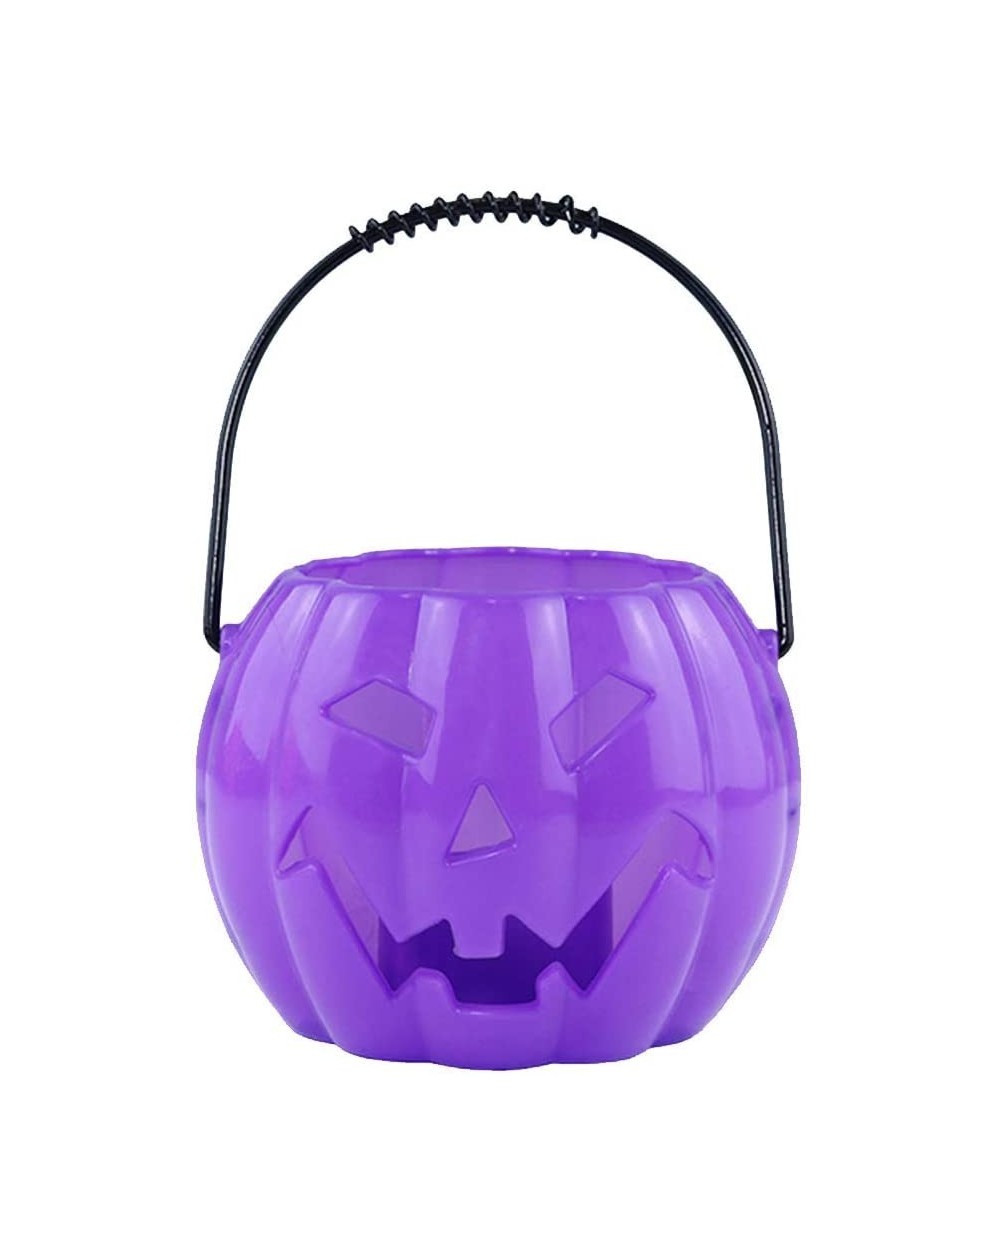 Party Favors Halloween Candy Basket Light Up Pumpkin Barrel Trick Treat Bucket Decorative Pumpkin Lights Props - Purple - C11...